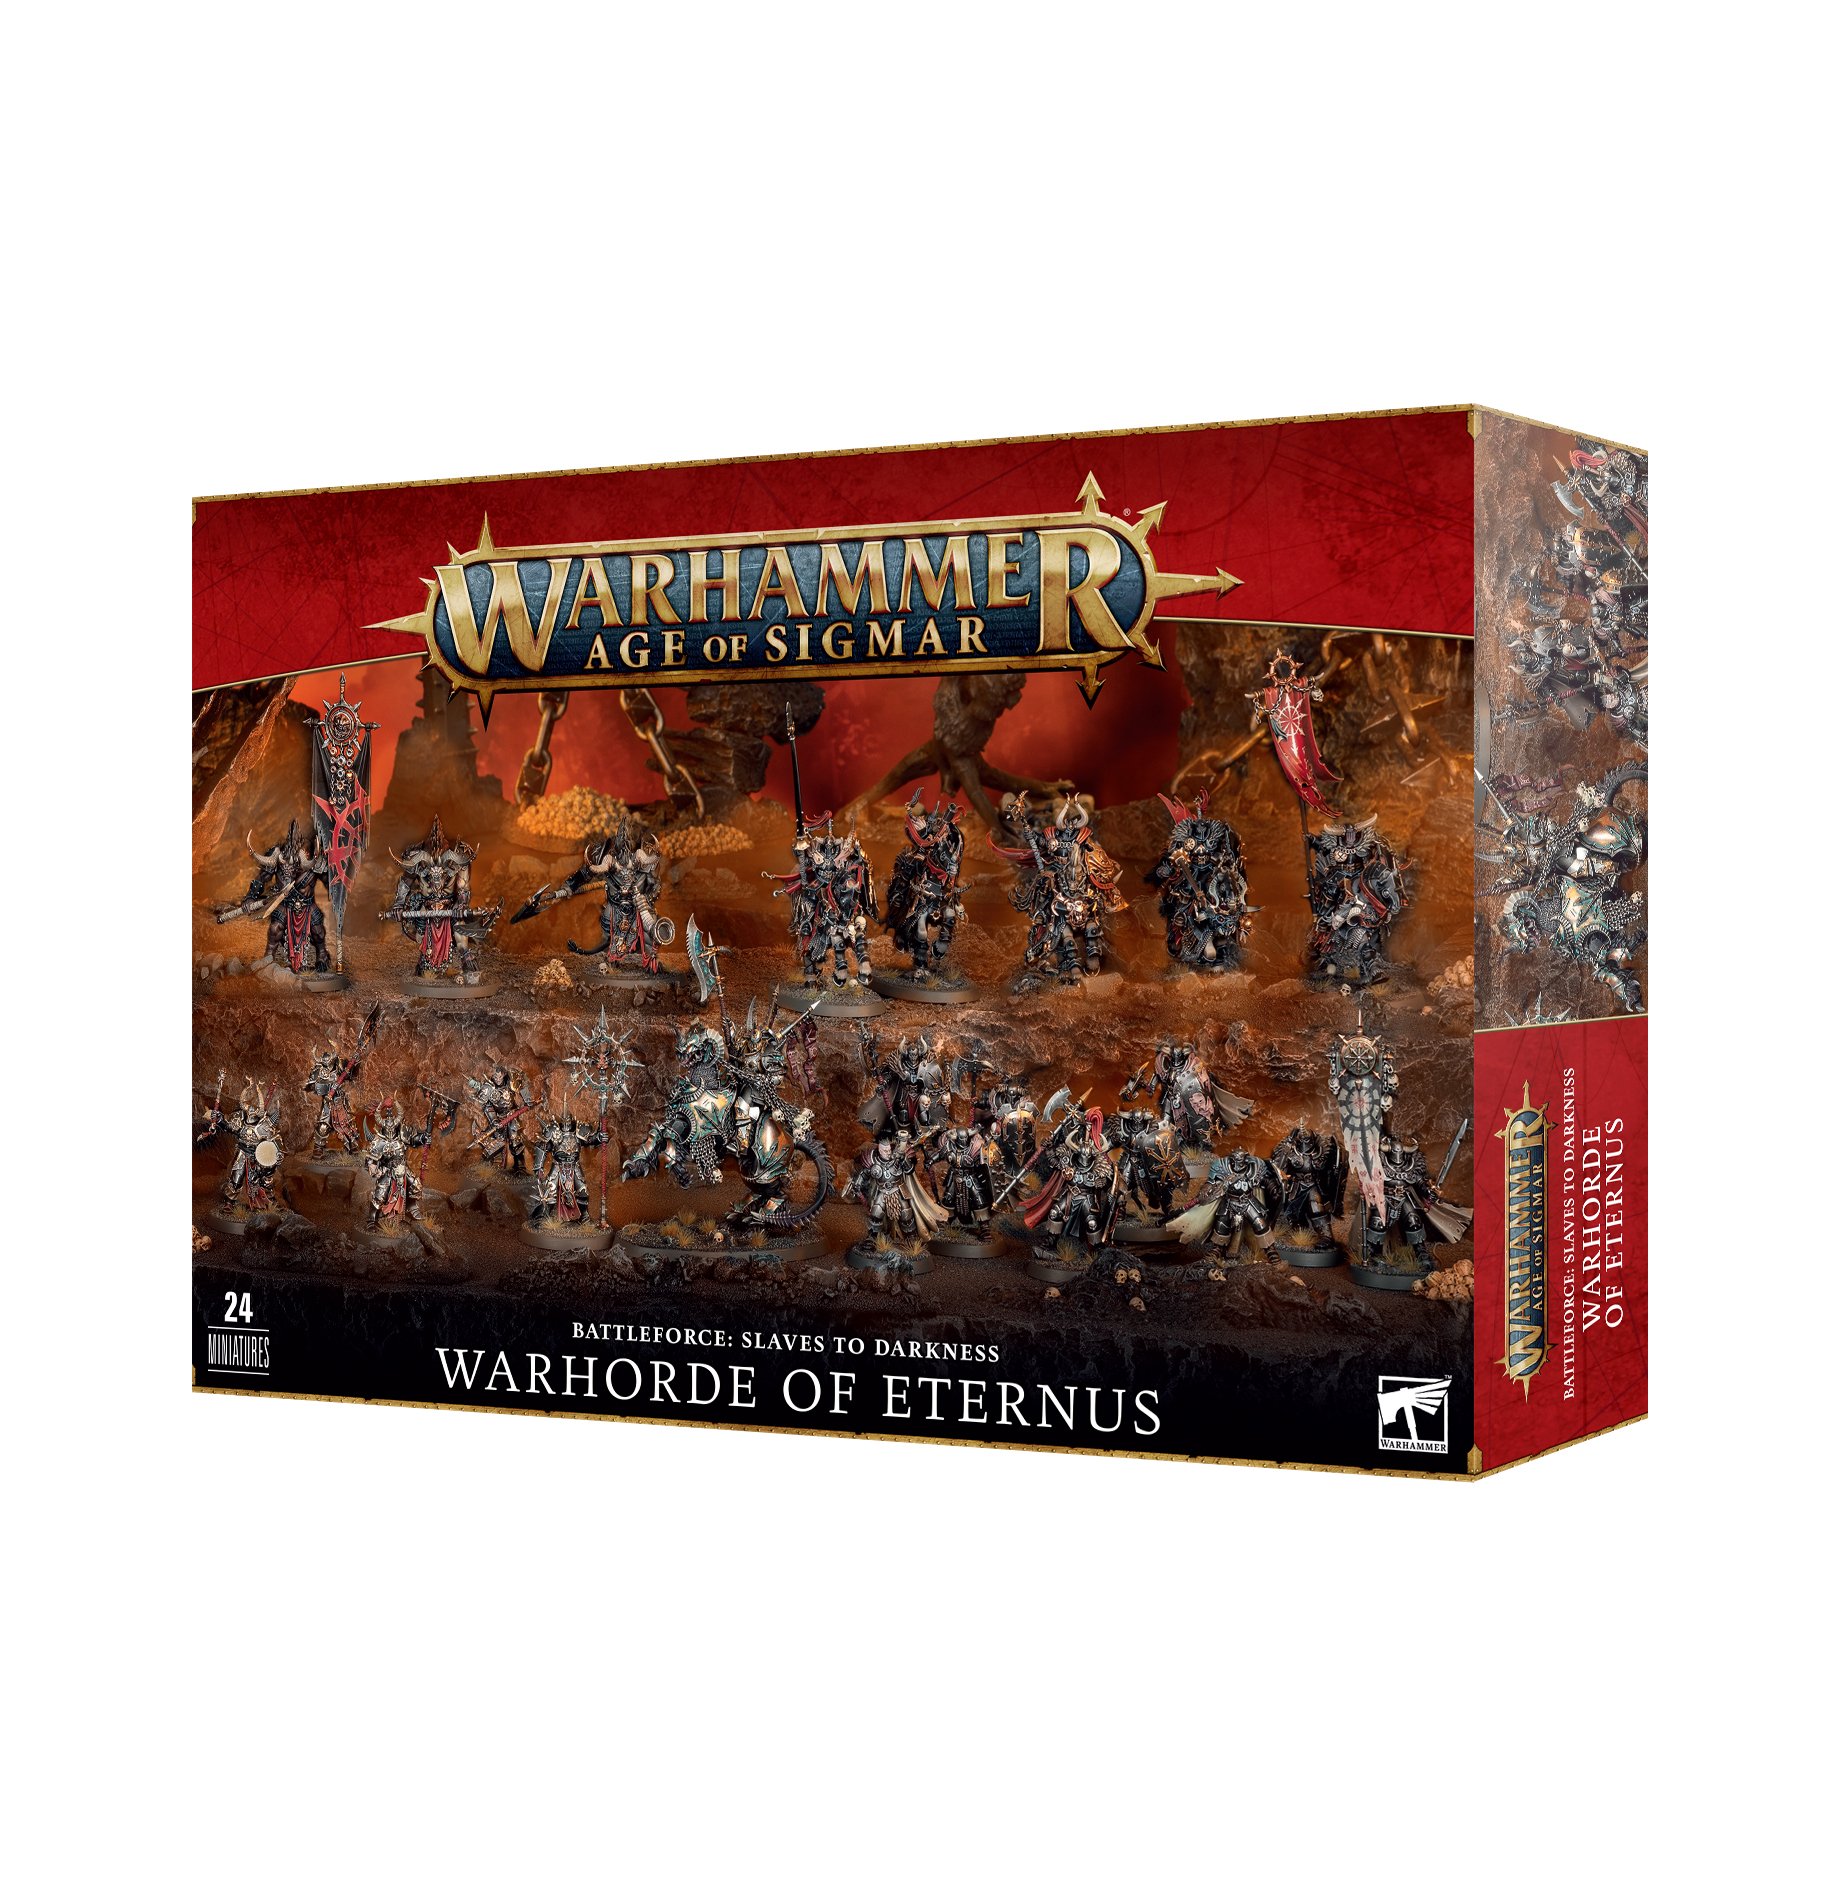 Battleforce: Slaves to Darkness - Warhorde of Eternus - 83-99 - Warhammer Age of Sigmar